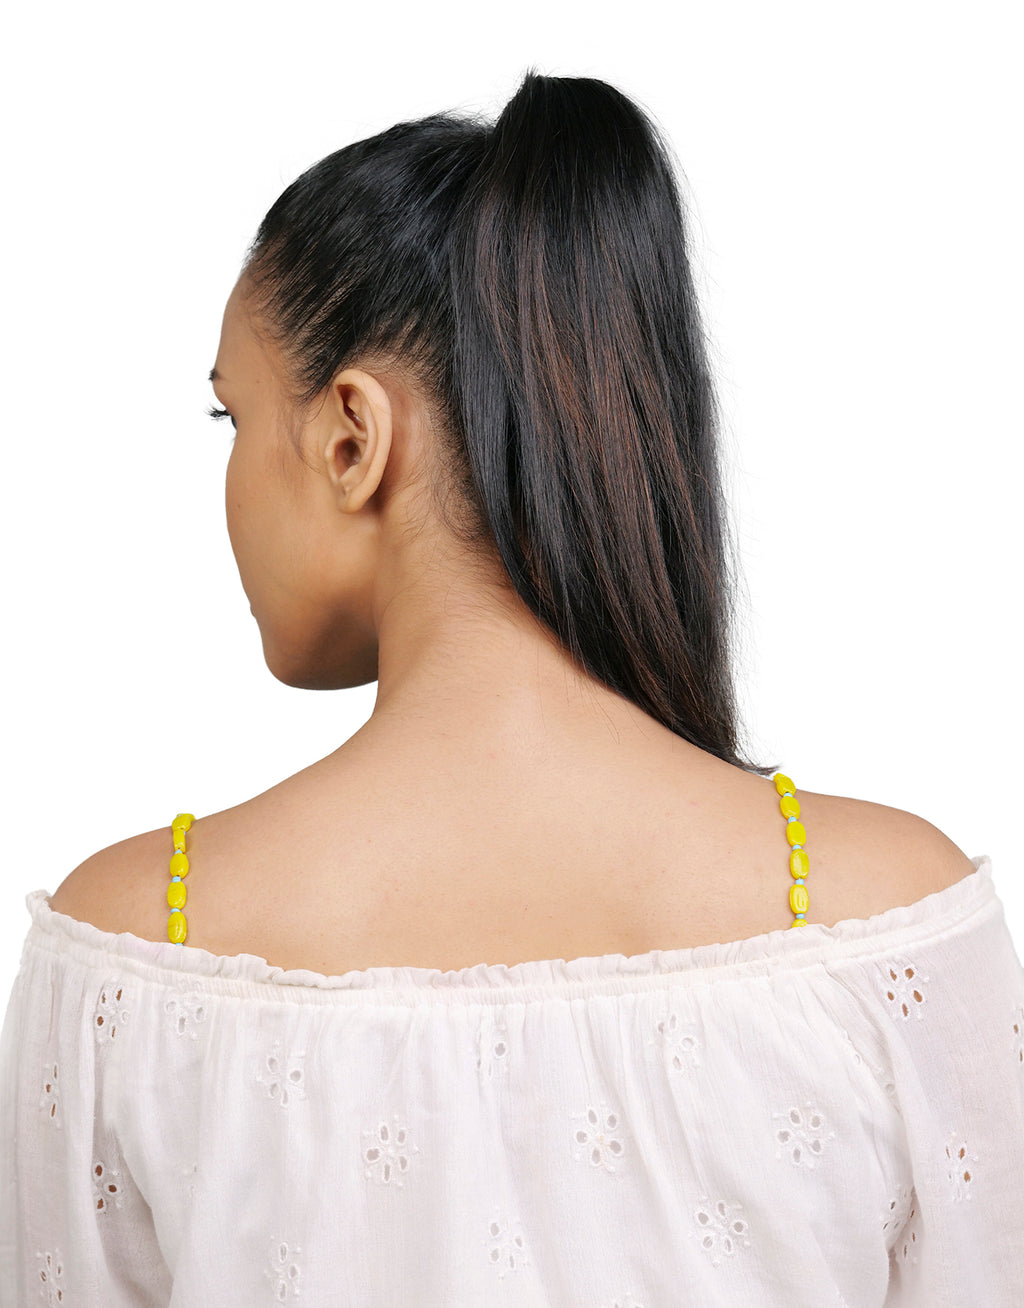 Various Styles of beaded bra straps at Yuvanta 💚💙💚 . Take a